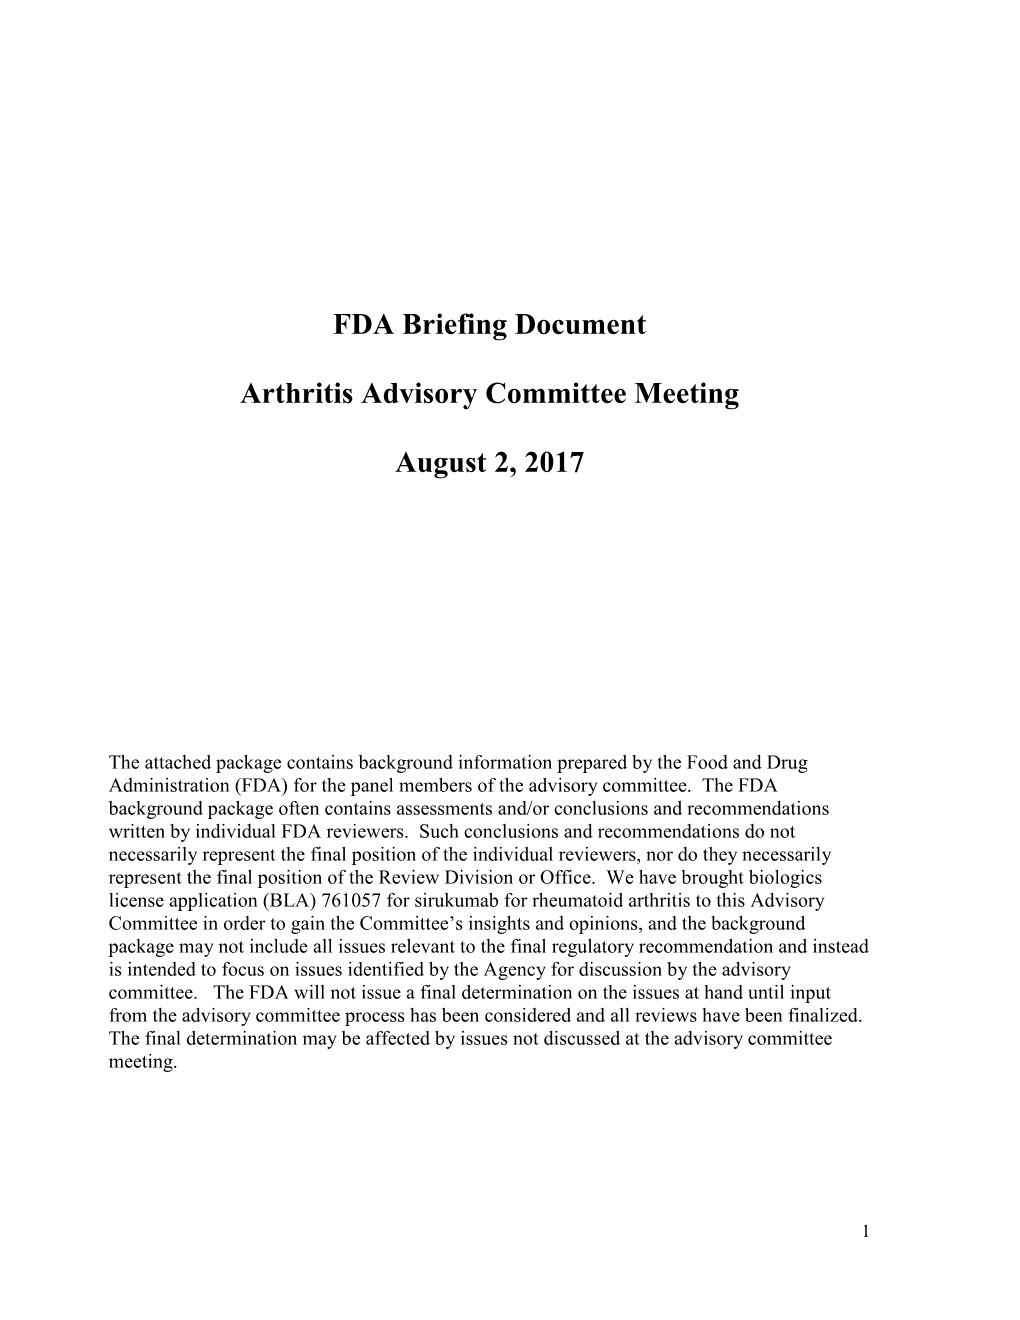 FDA Briefing Document Arthritis Advisory Committee Meeting